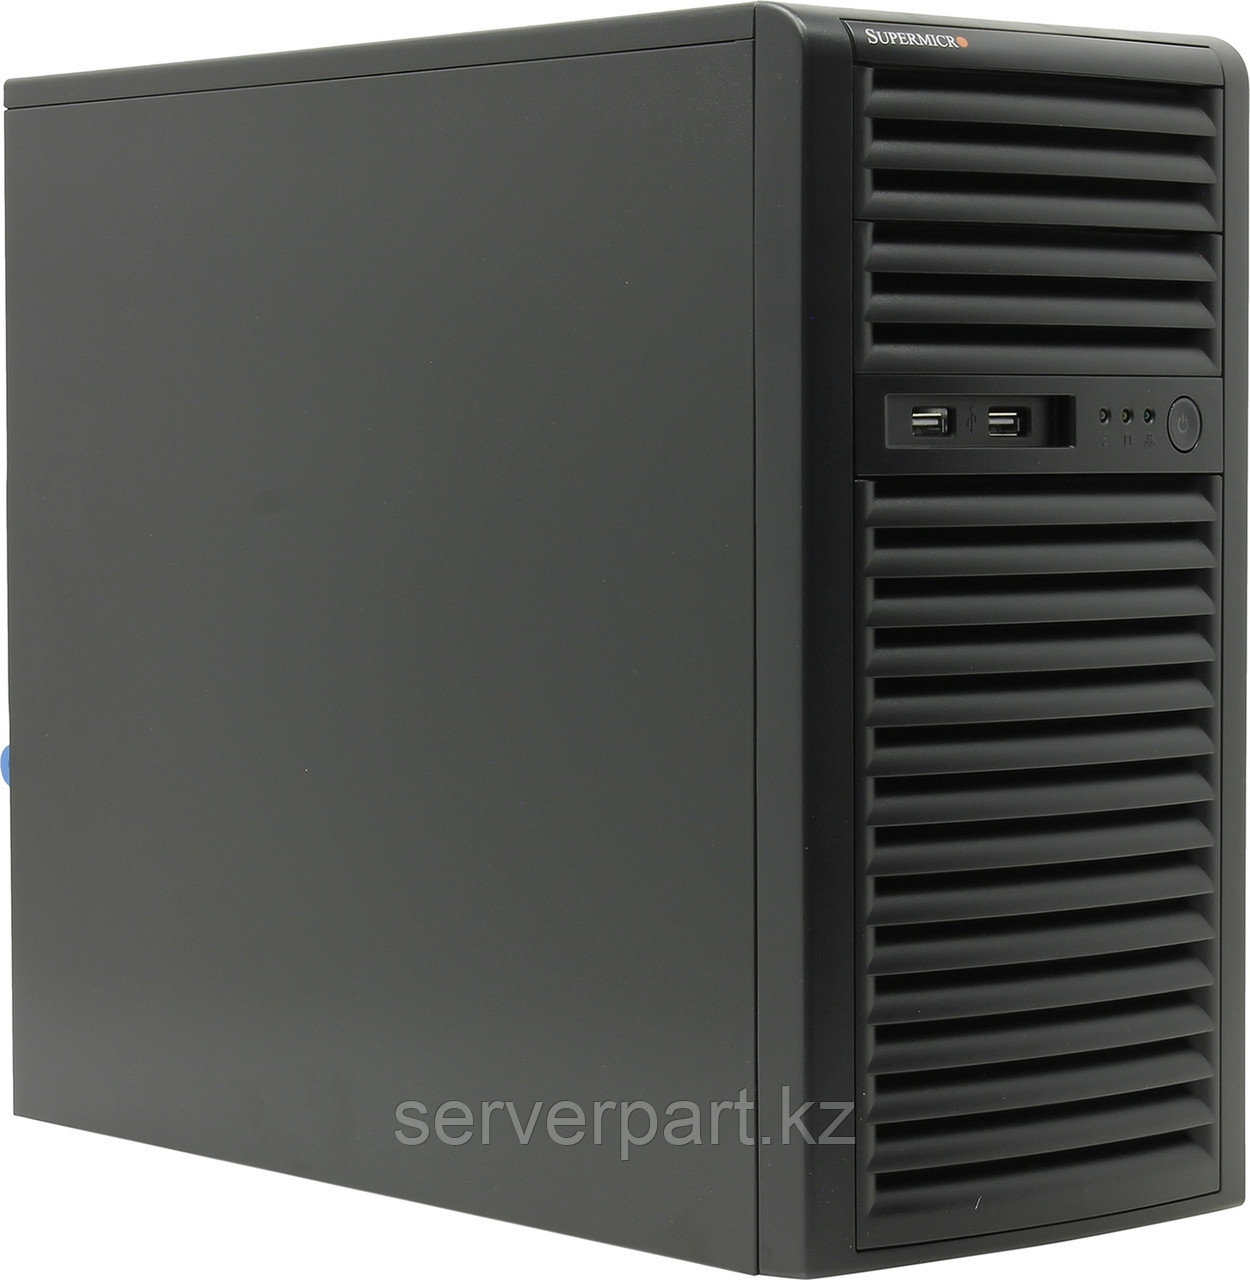 Сервер Supermicro SYS-5039D Tower 4LFF/4-core intel Xeon E3-1220v6 3GHz/16GB EUDIMM/2x240GB SSD RI Hyb